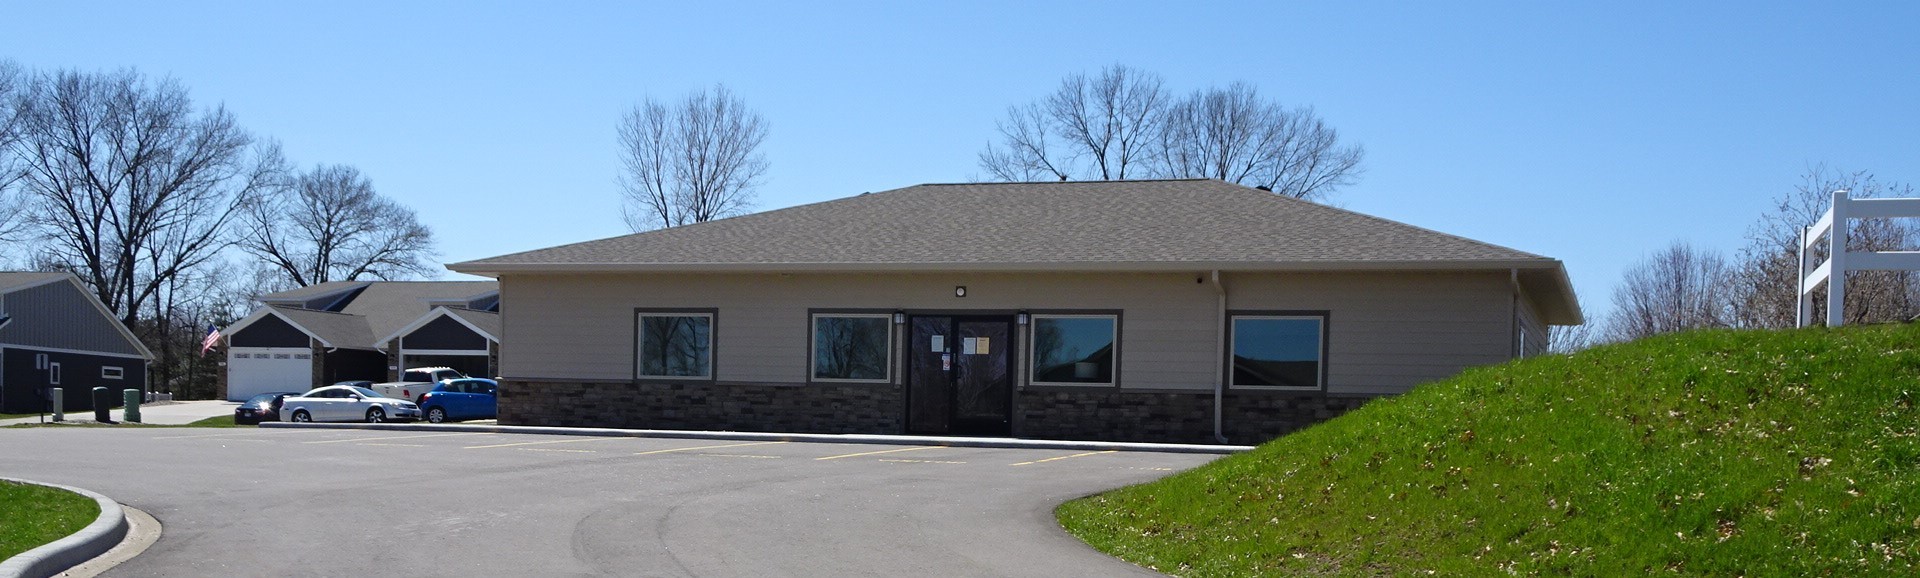 Brott Property Management office 543 Ryan st. Holmen Wisconsin 54636